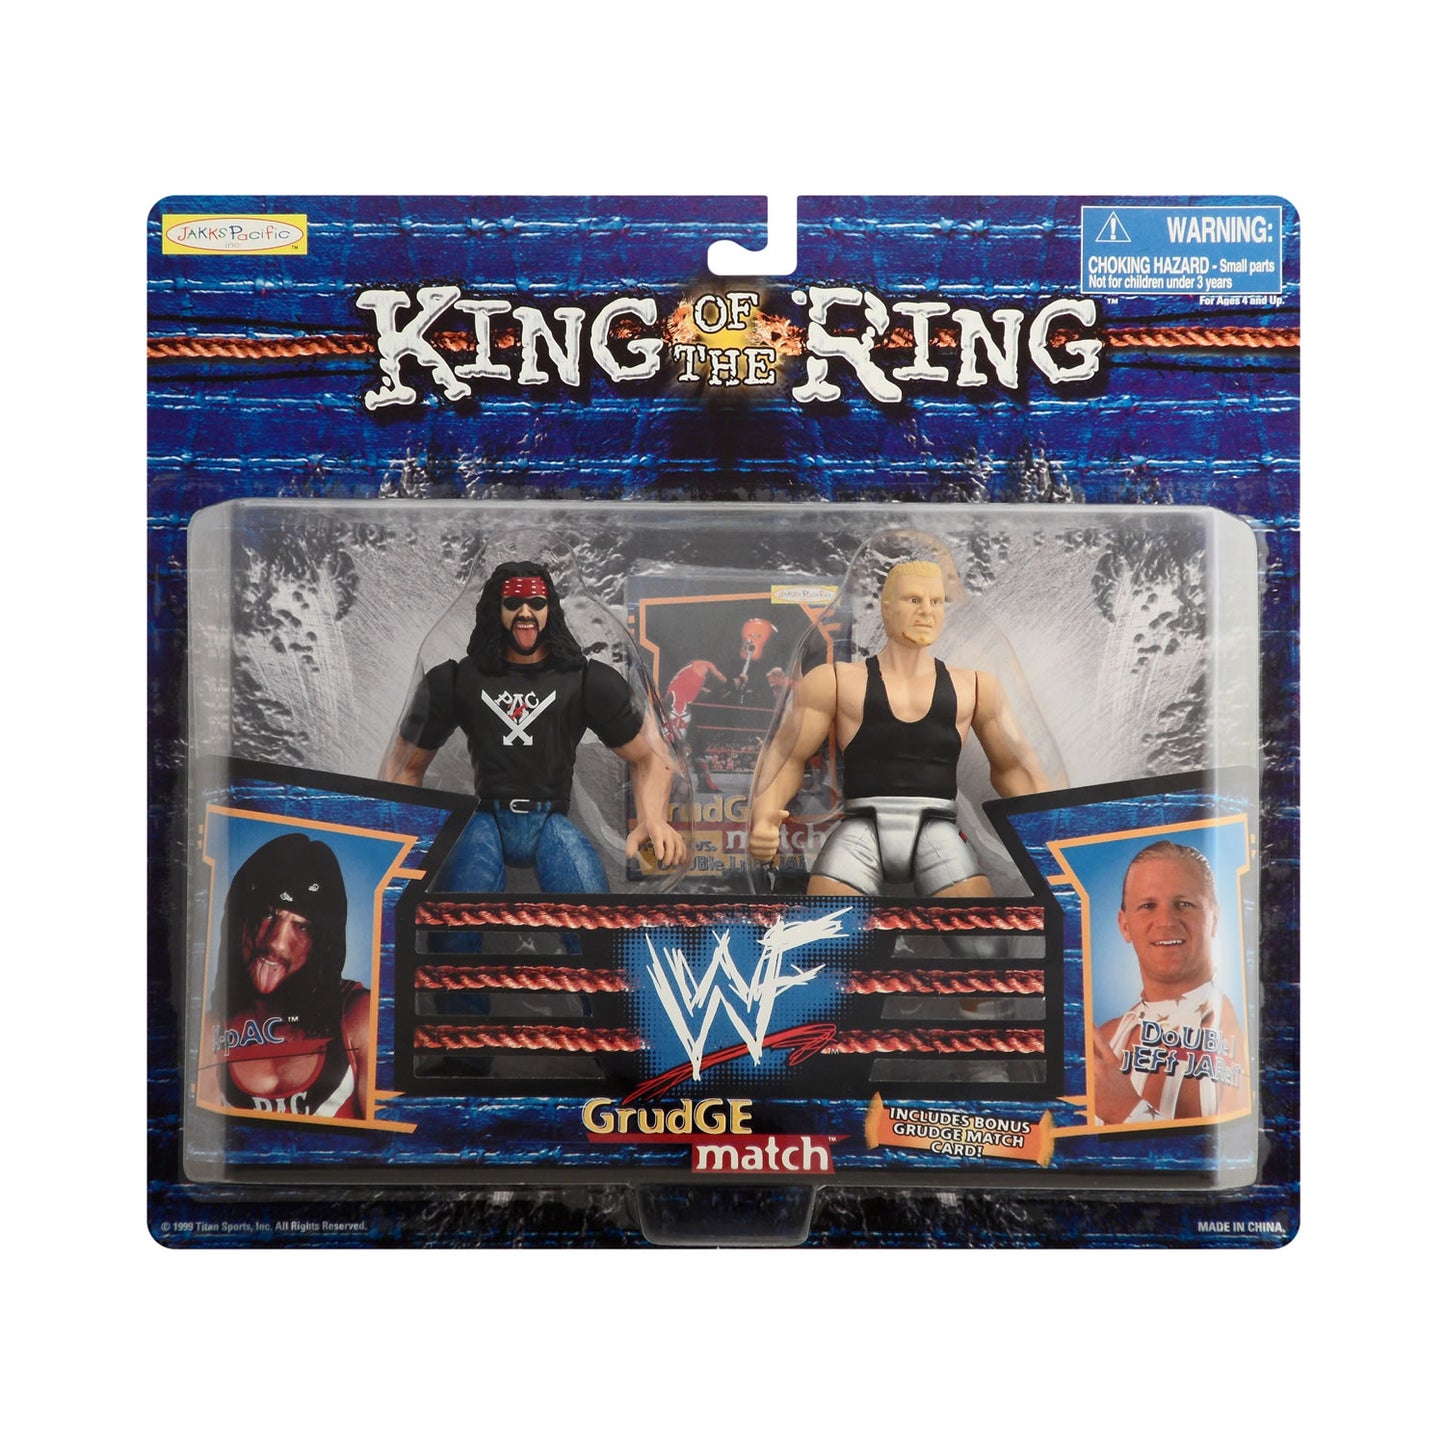 WWF King of the Ring Grudge Match X-Pac vs. Double J Jeff Jarett